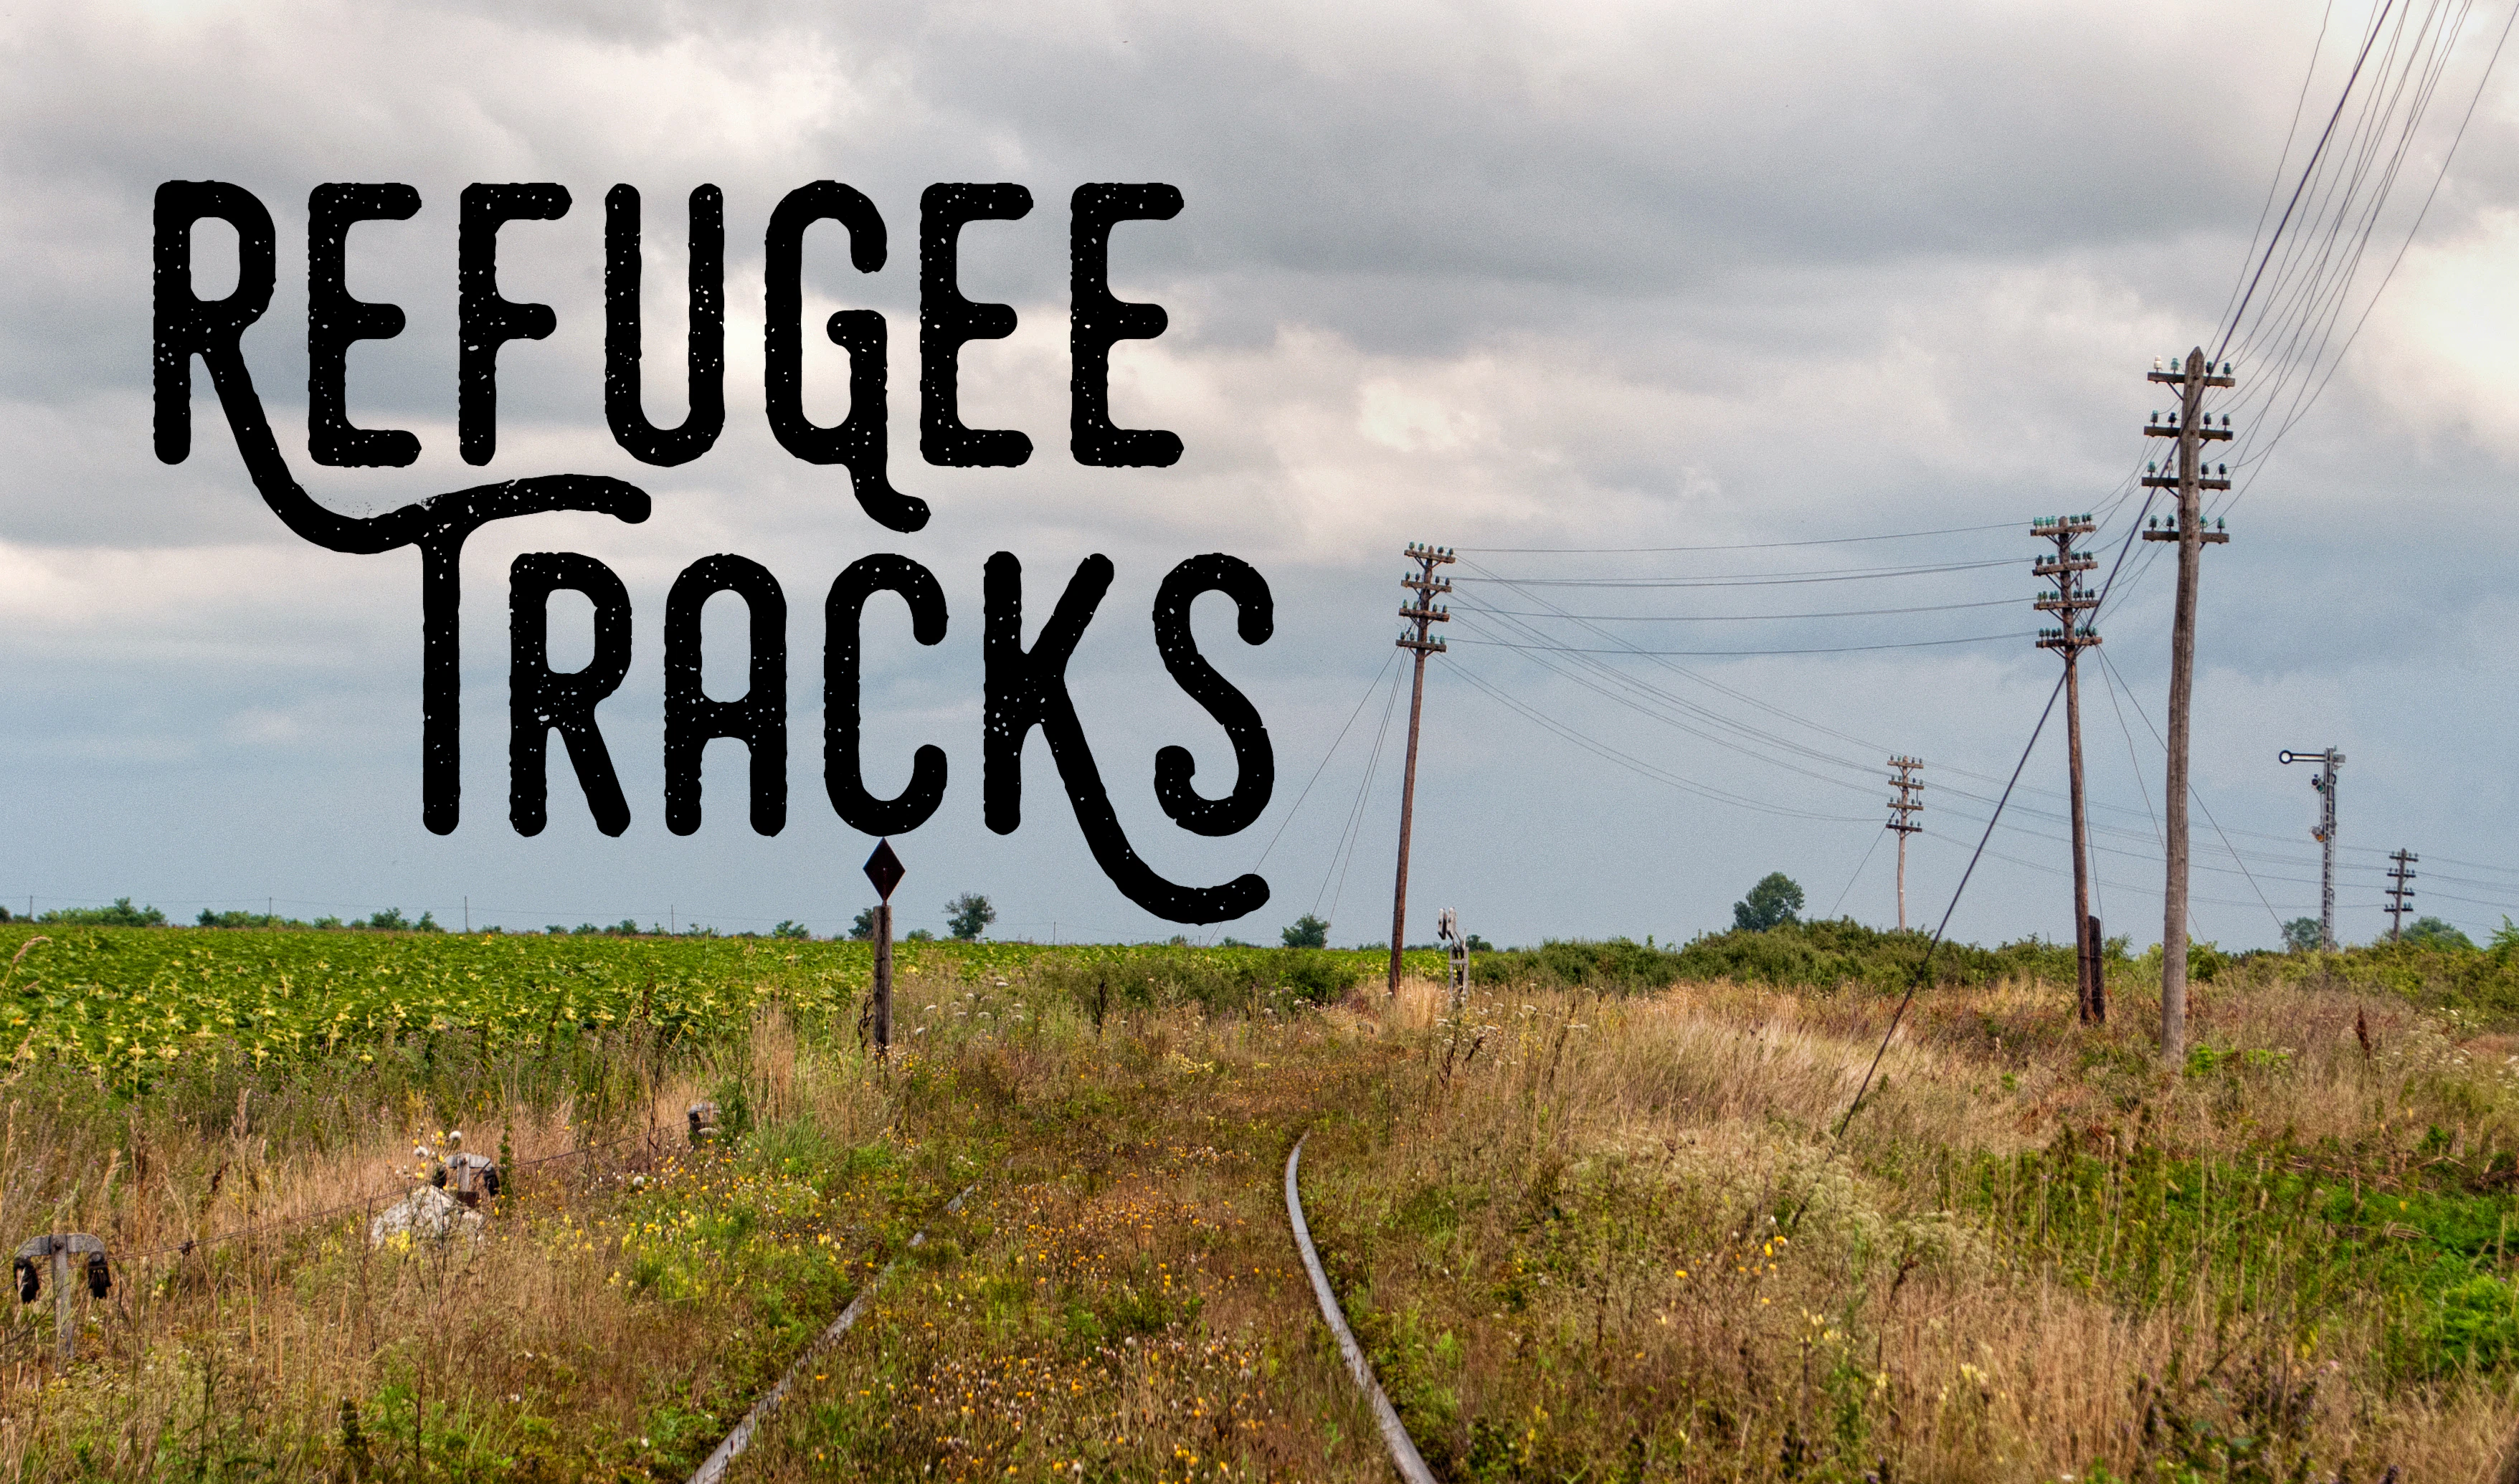 Refugee Tracks